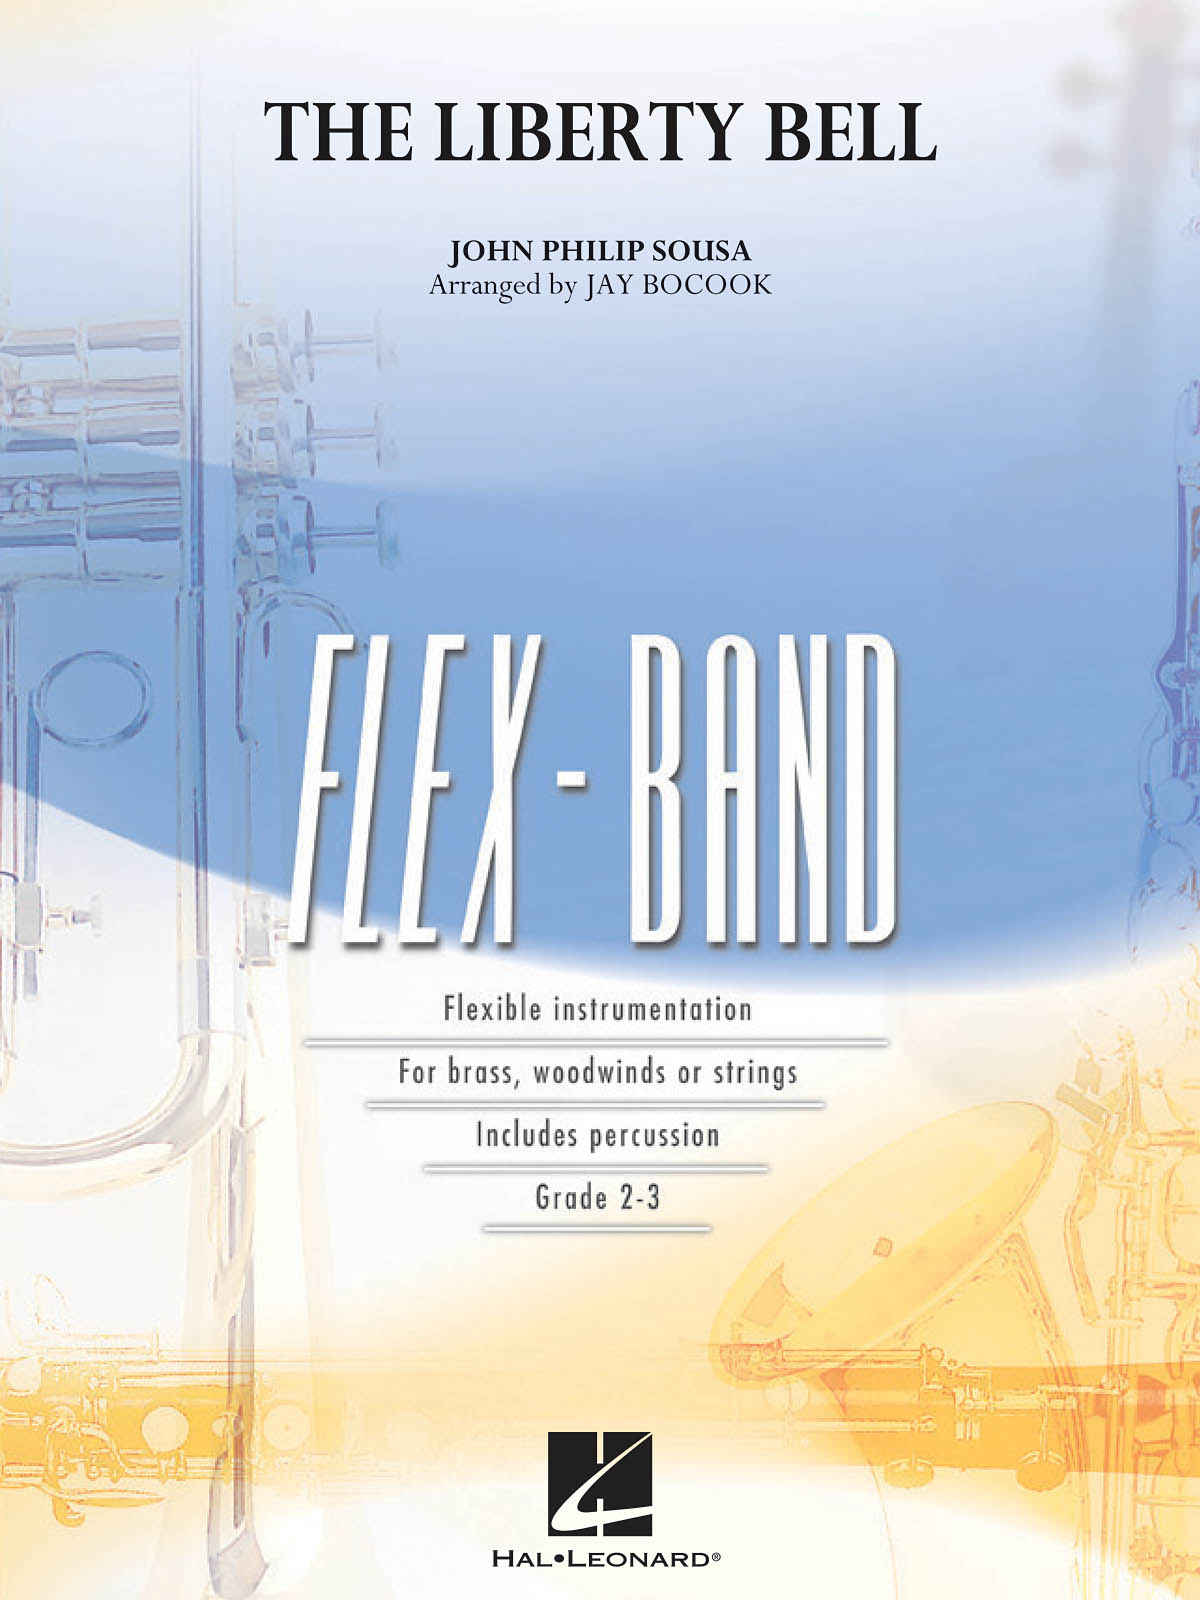 John Philip Sousa: The Liberty Bell (flexband): Concert Band: Score